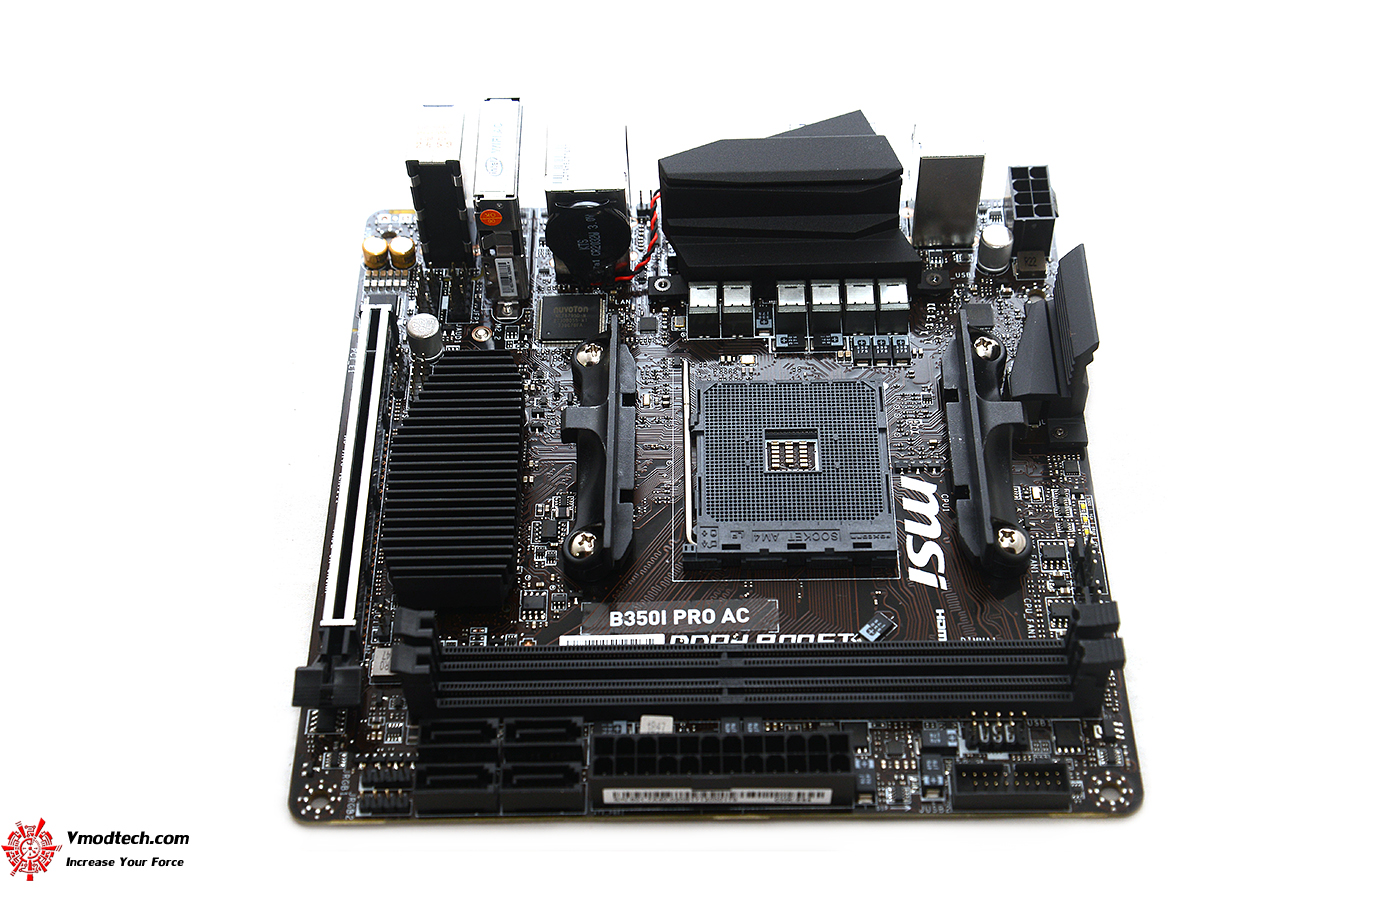 dsc 8843 AMD RYZEN 5 2400G RAVEN RIDGE PROCESSOR REVIEW